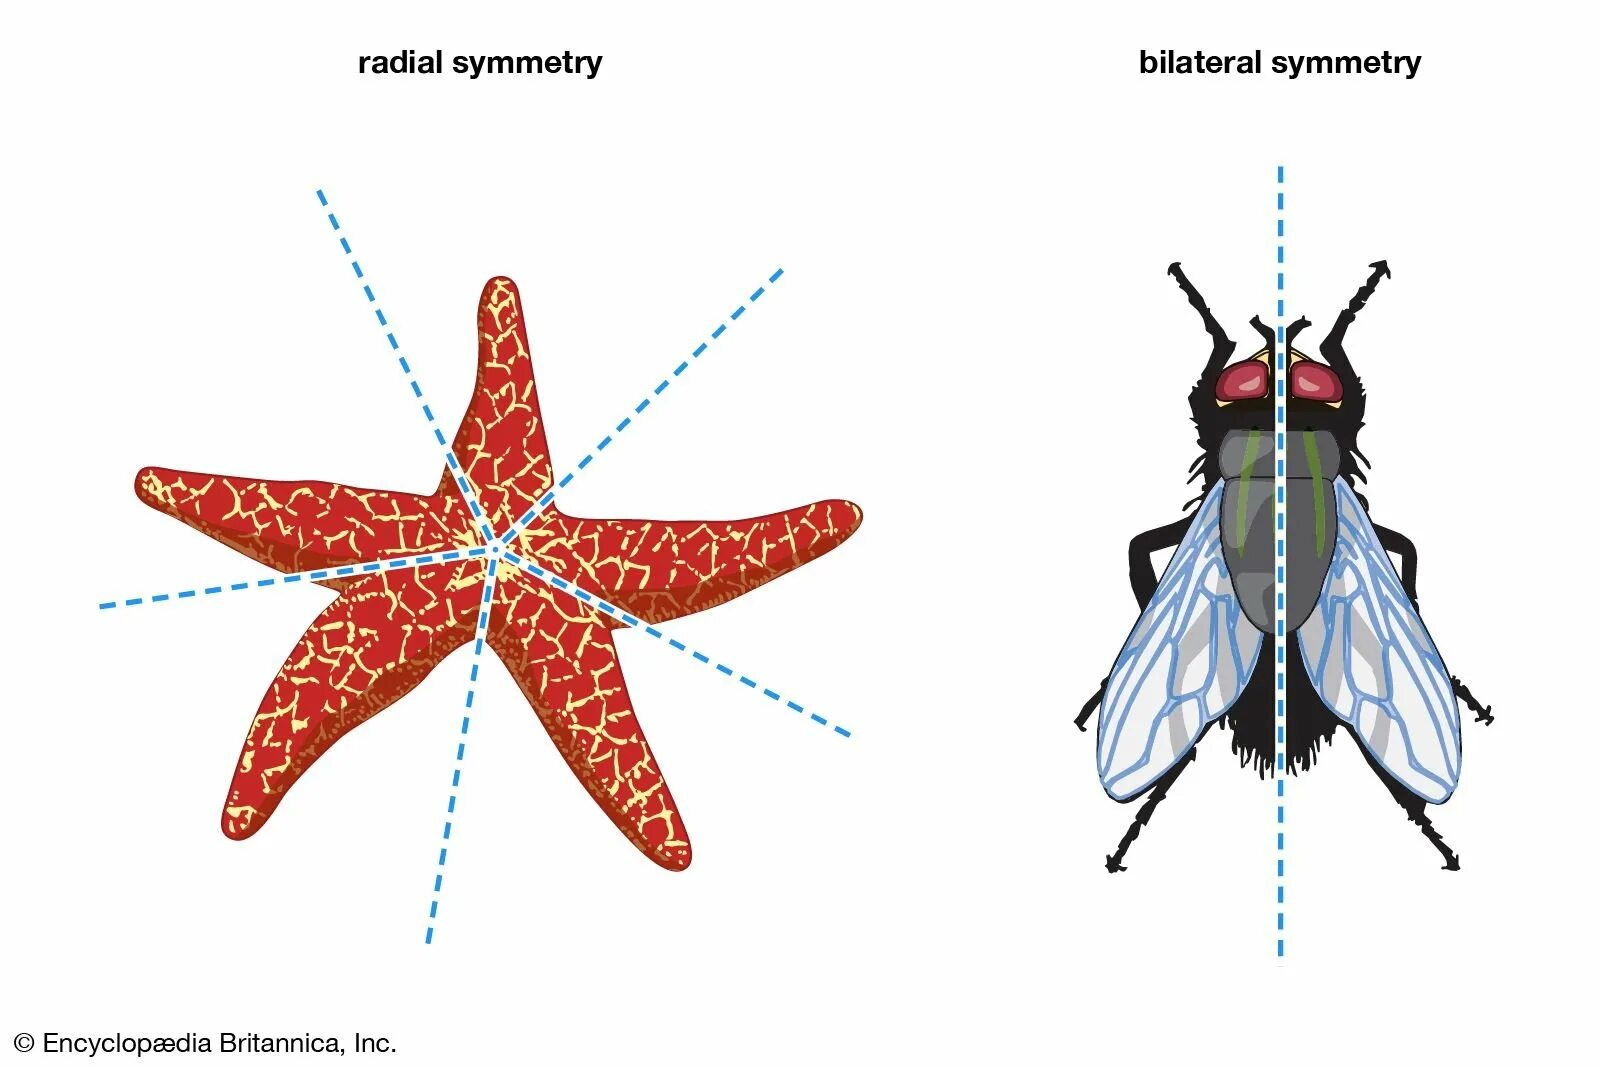 Тип симметрии мыши. Пятилучевая симметрия иглокожих. Двусторонняя симметрия у животных. Лучевая и двусторонняя симметрия. Билатеральная и радиальная симметрия.